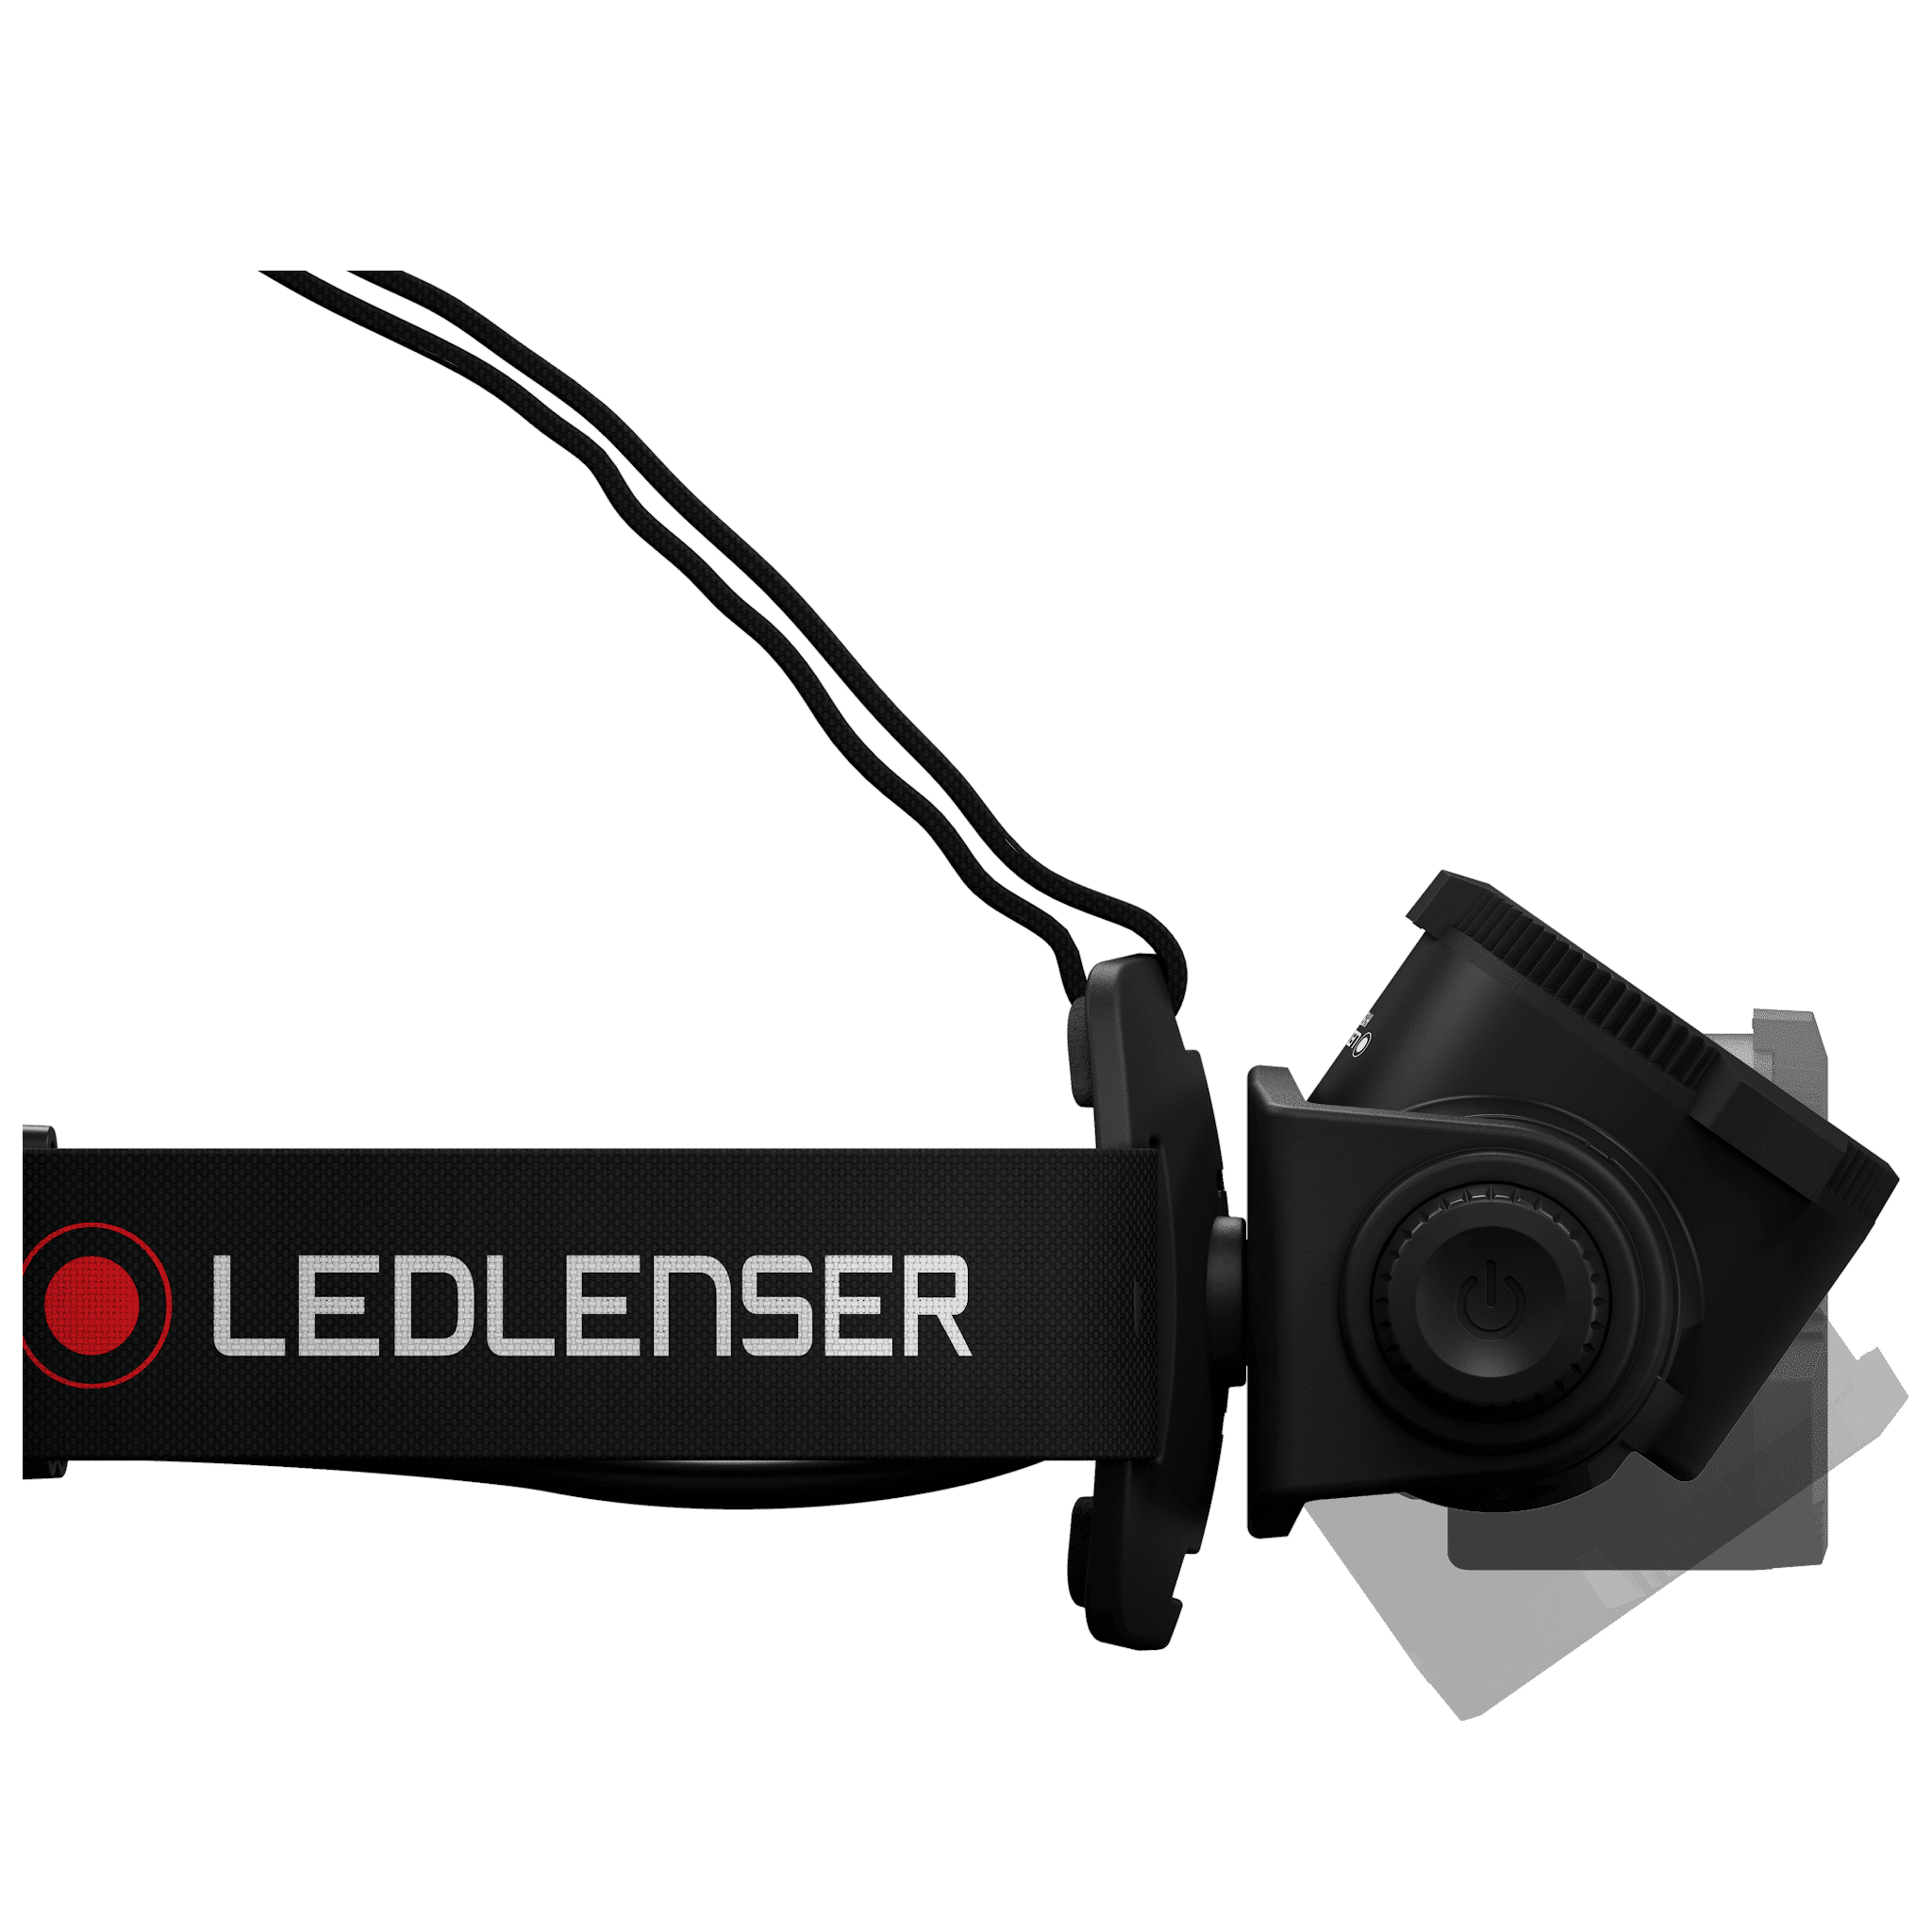 LED Lenser H15R Core Headlamp, Li-ion 7.4V, Black - Walmart.com